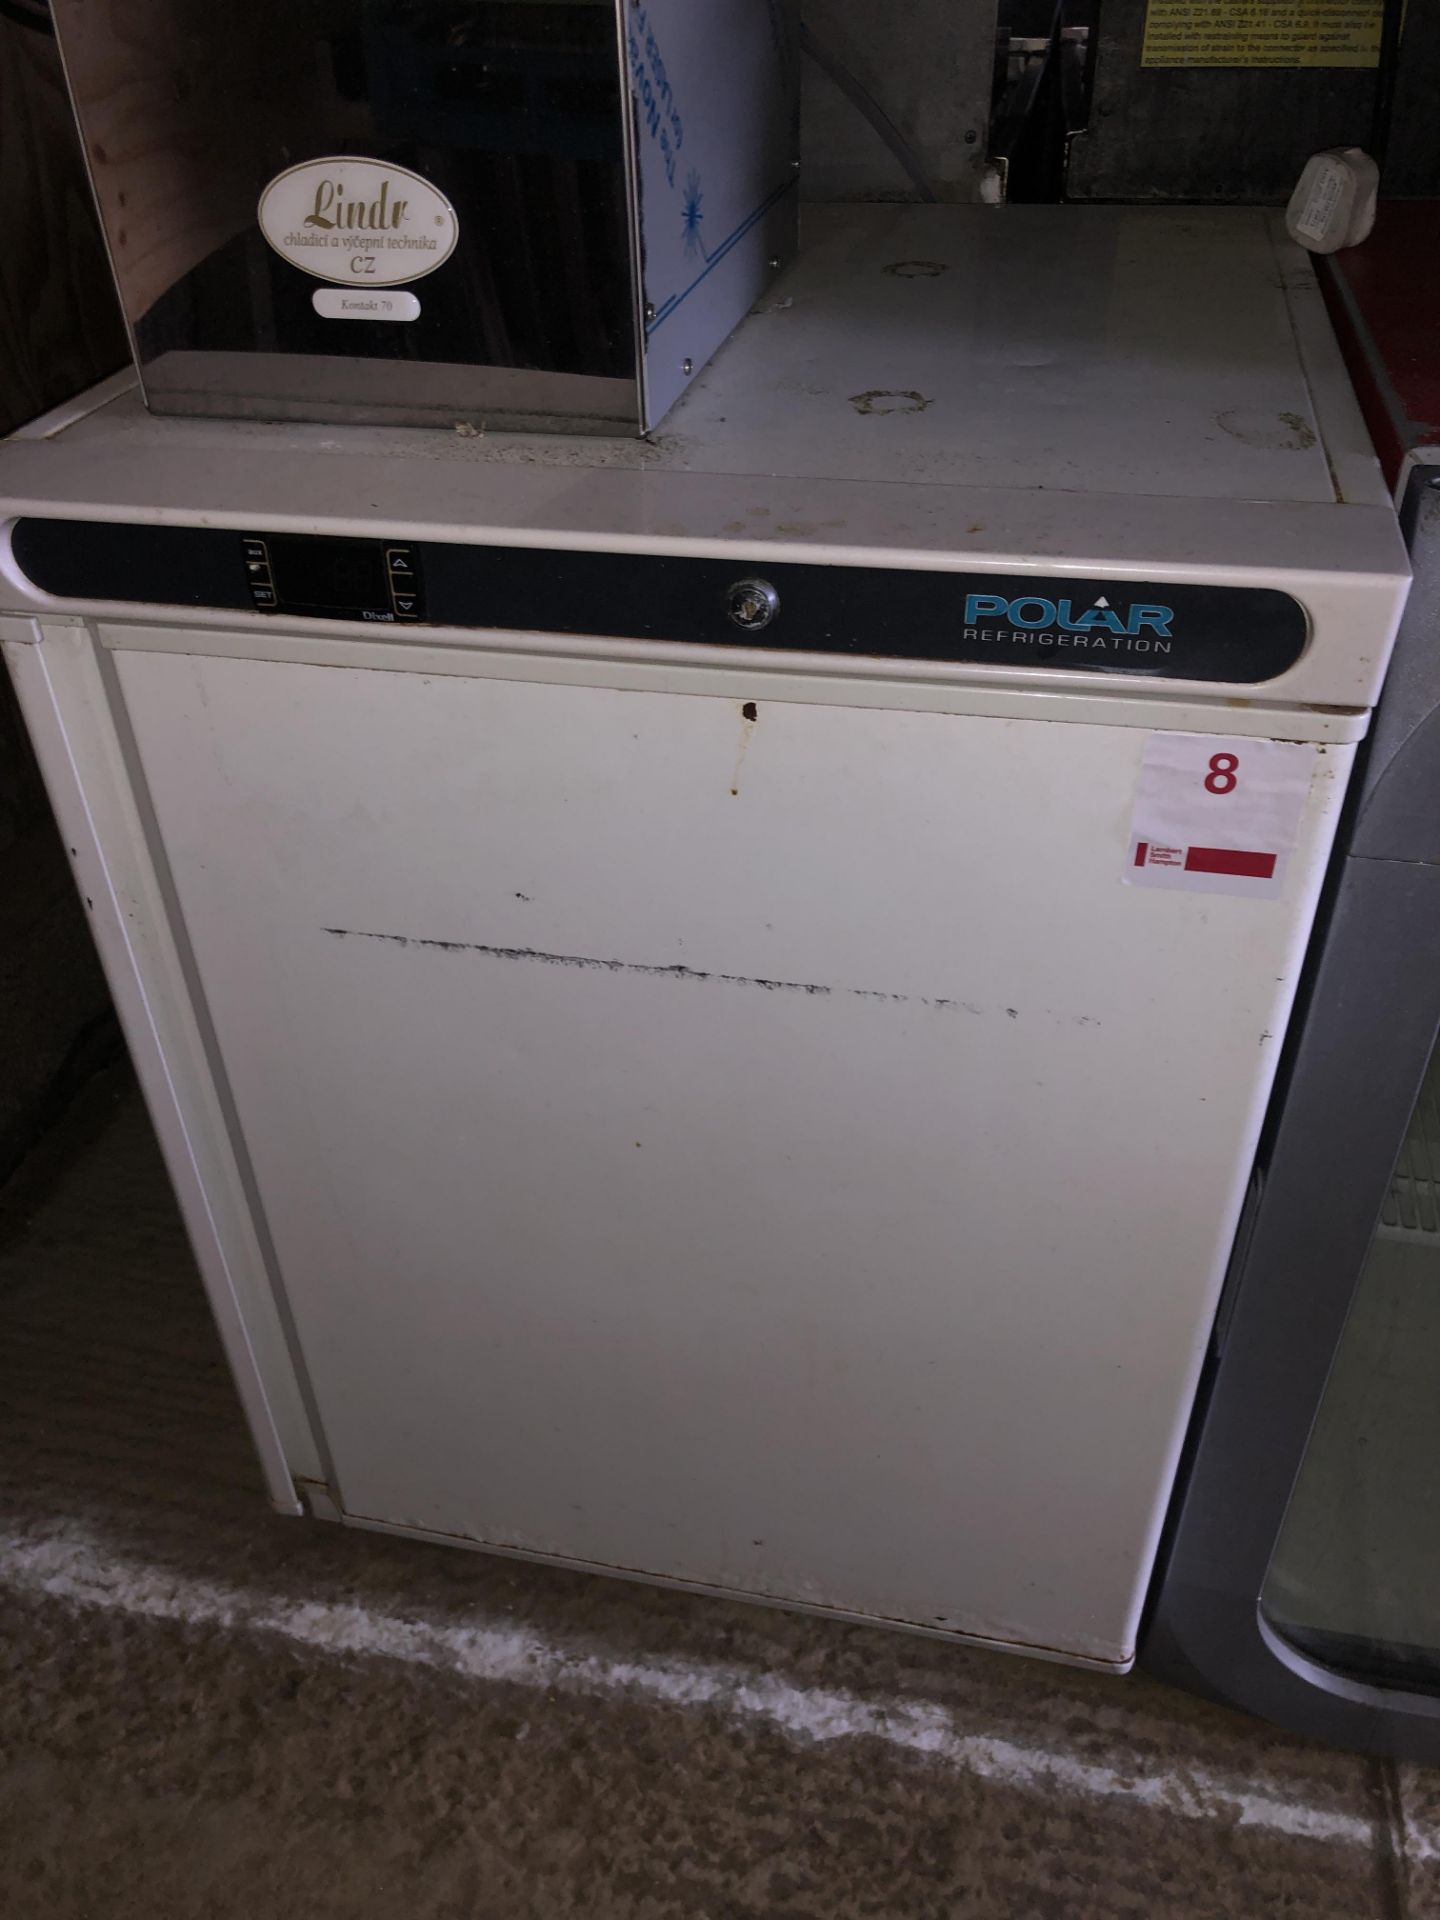 Polar CD611-1406 single under counter freezer, serial no. 7089681